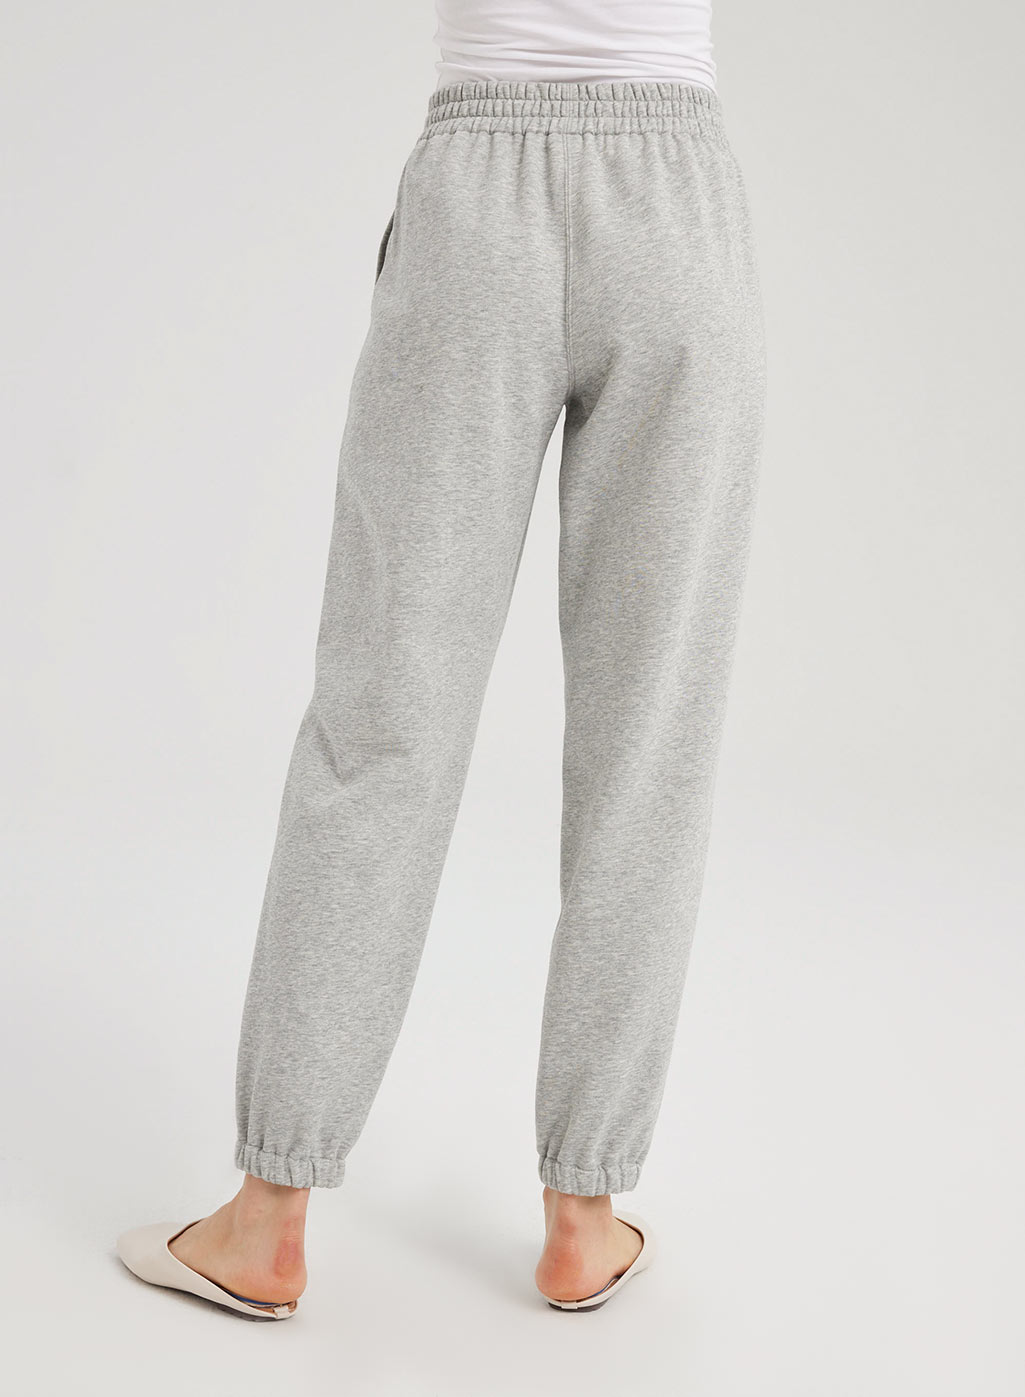 Grey Sweatpants with pockets and drawstring